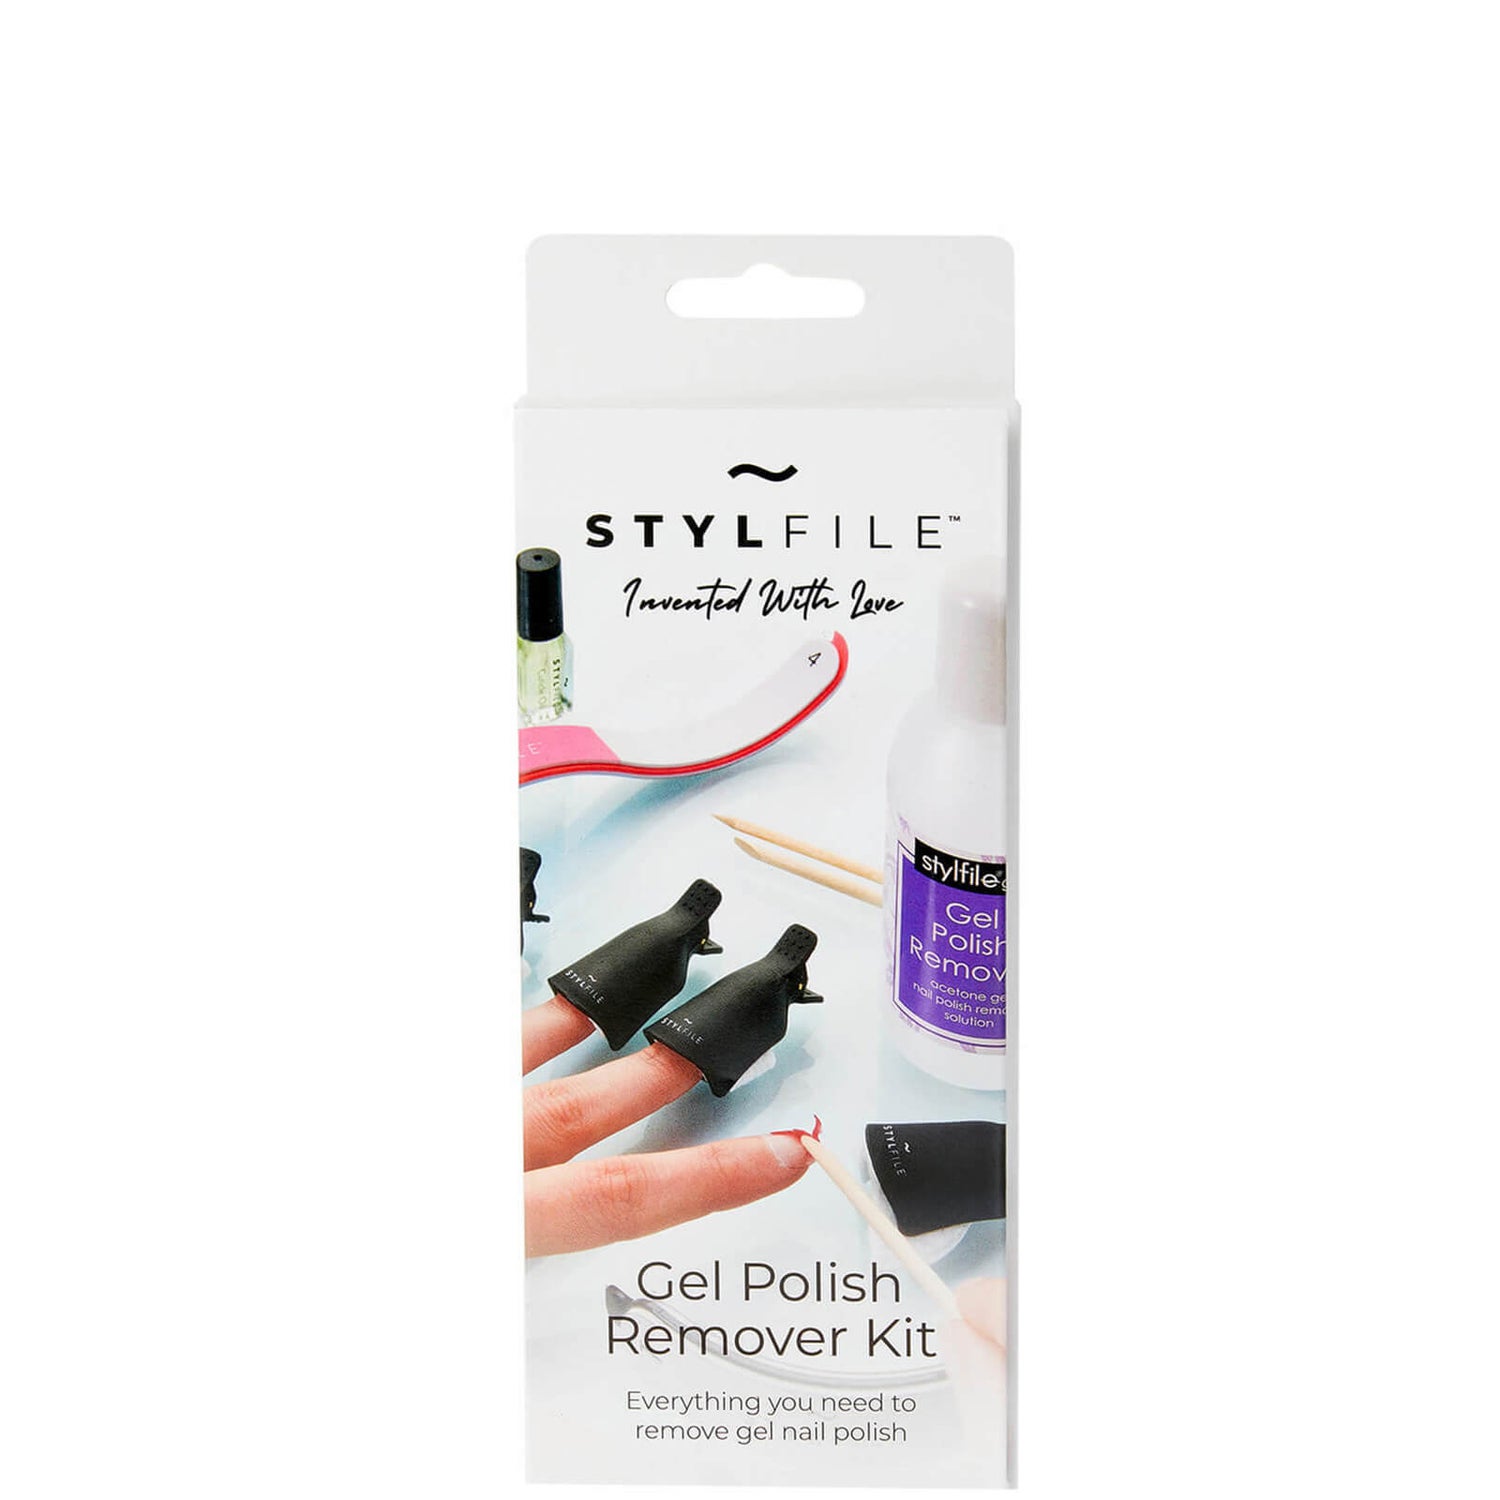 StylFile Gel Polish Remover Kit